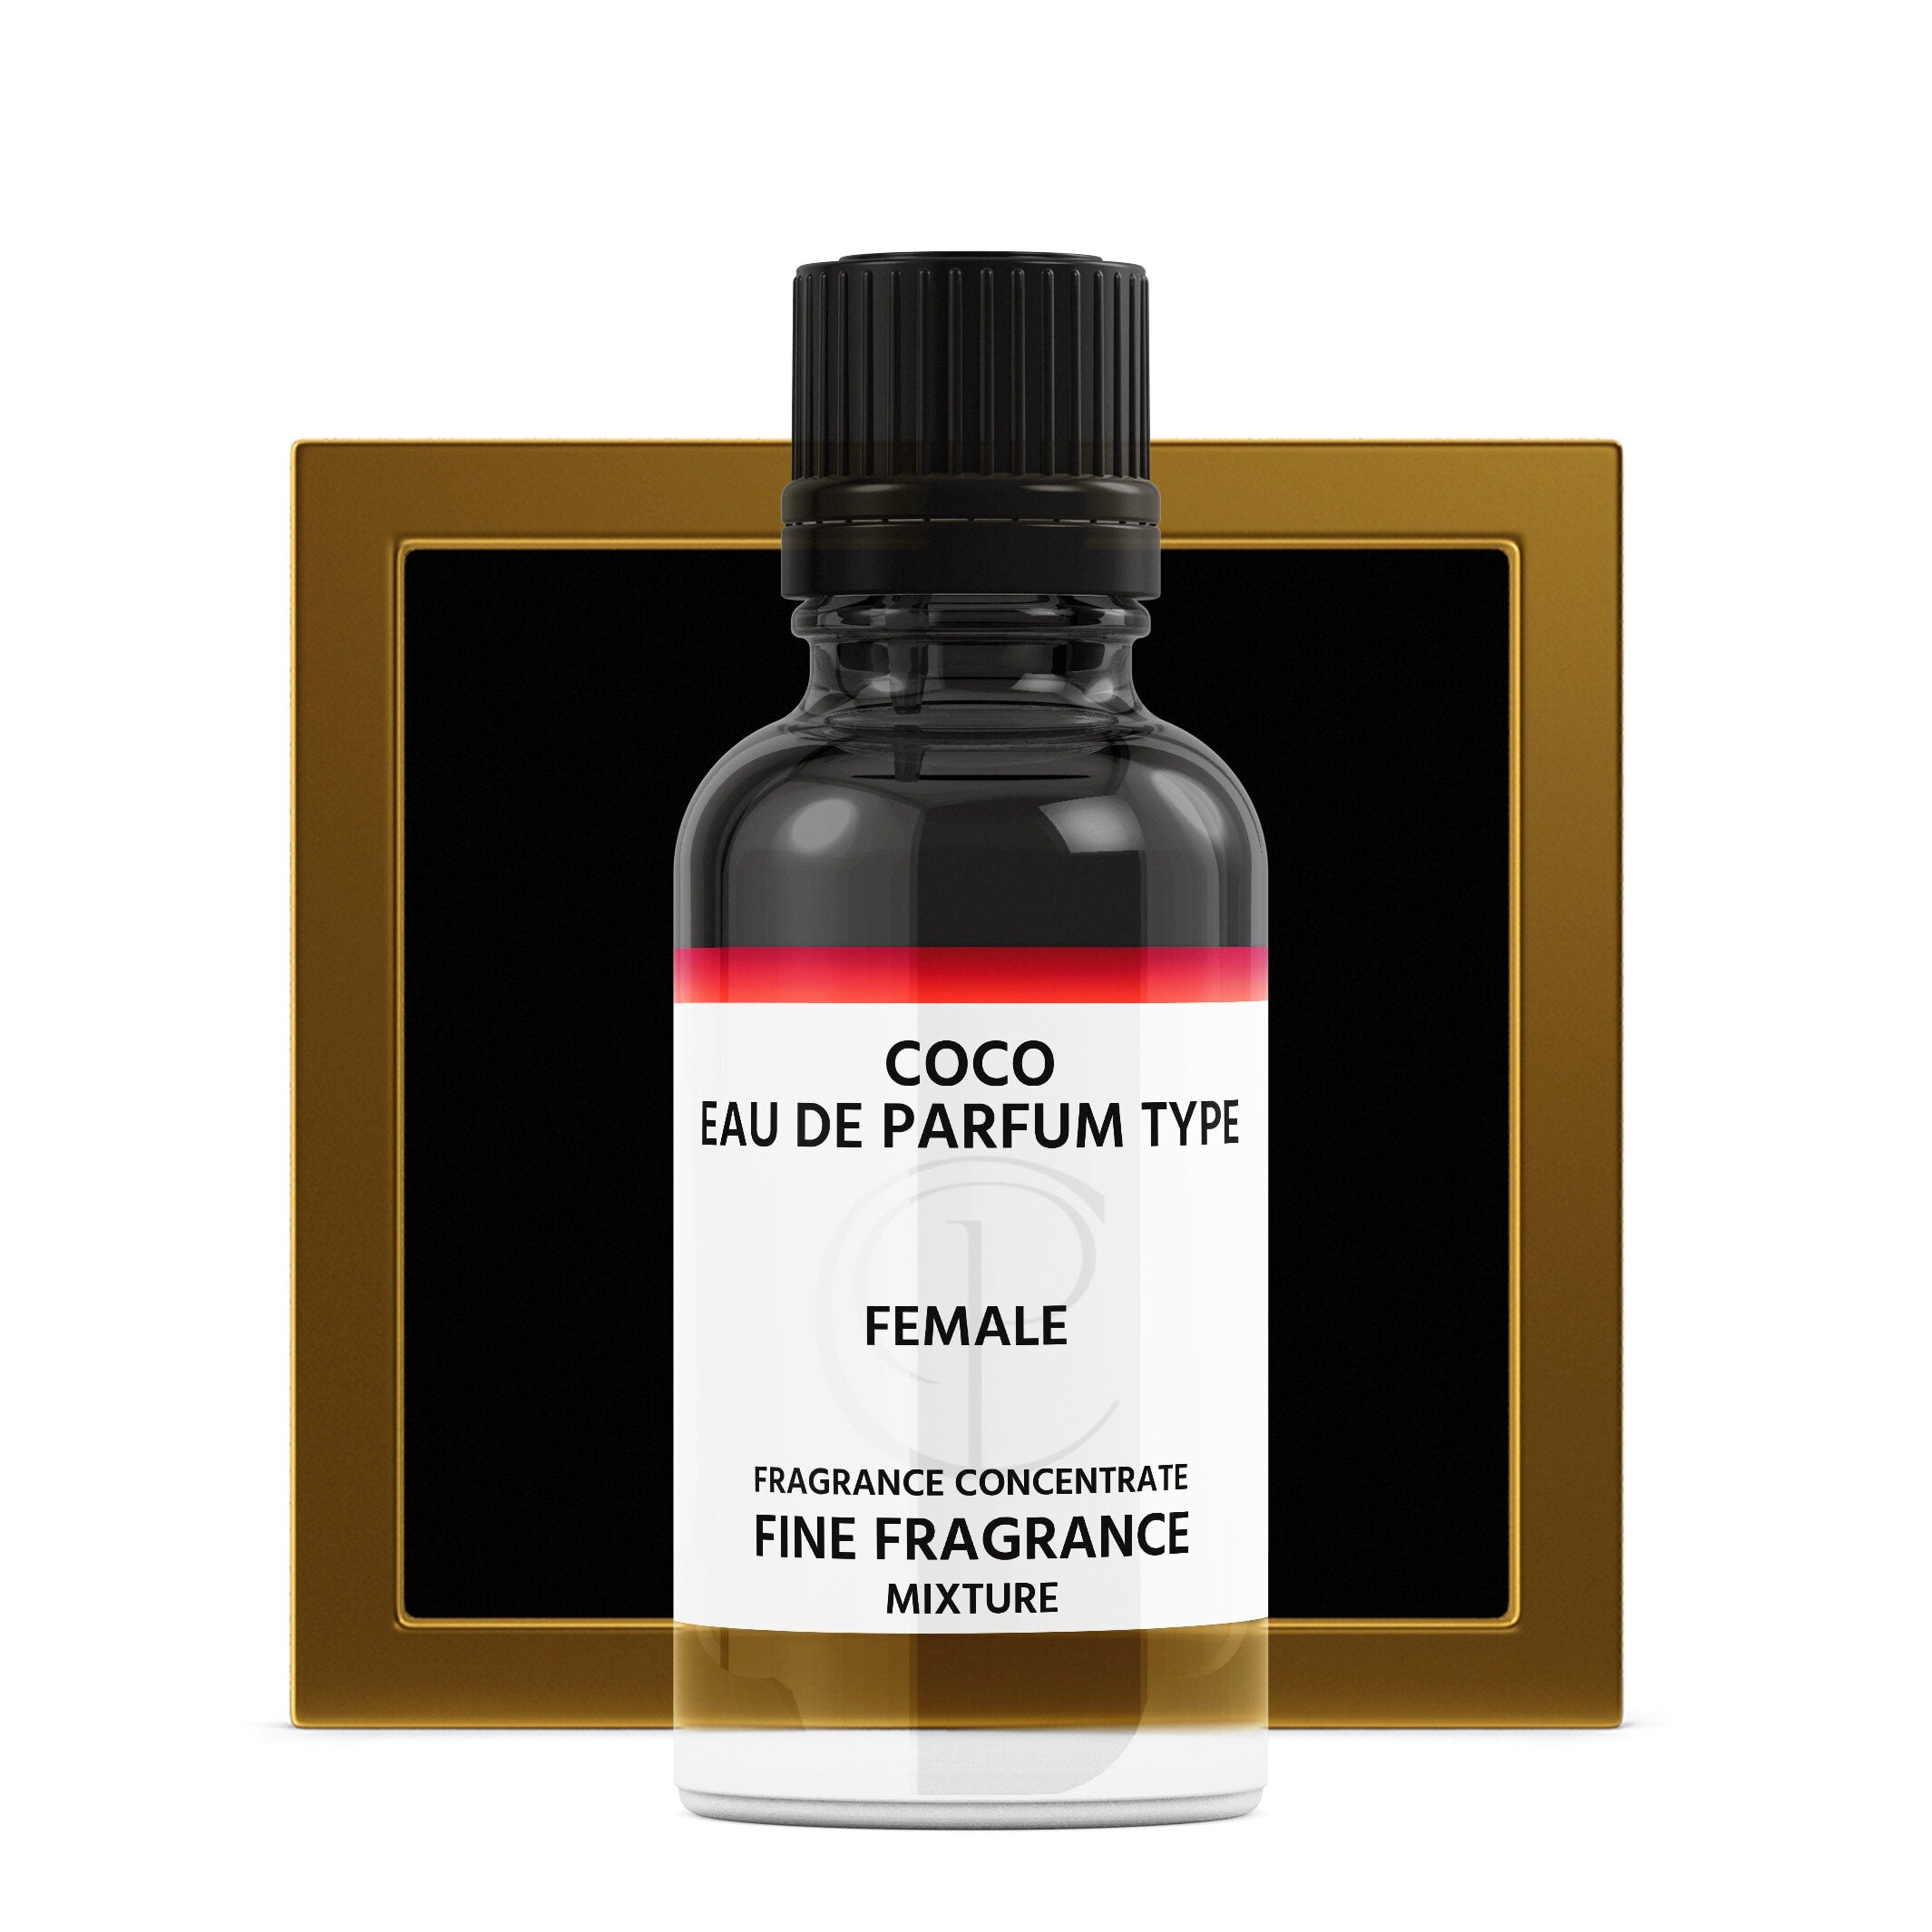 COCO EAU DE PARFUM TYPE – Creating Perfume